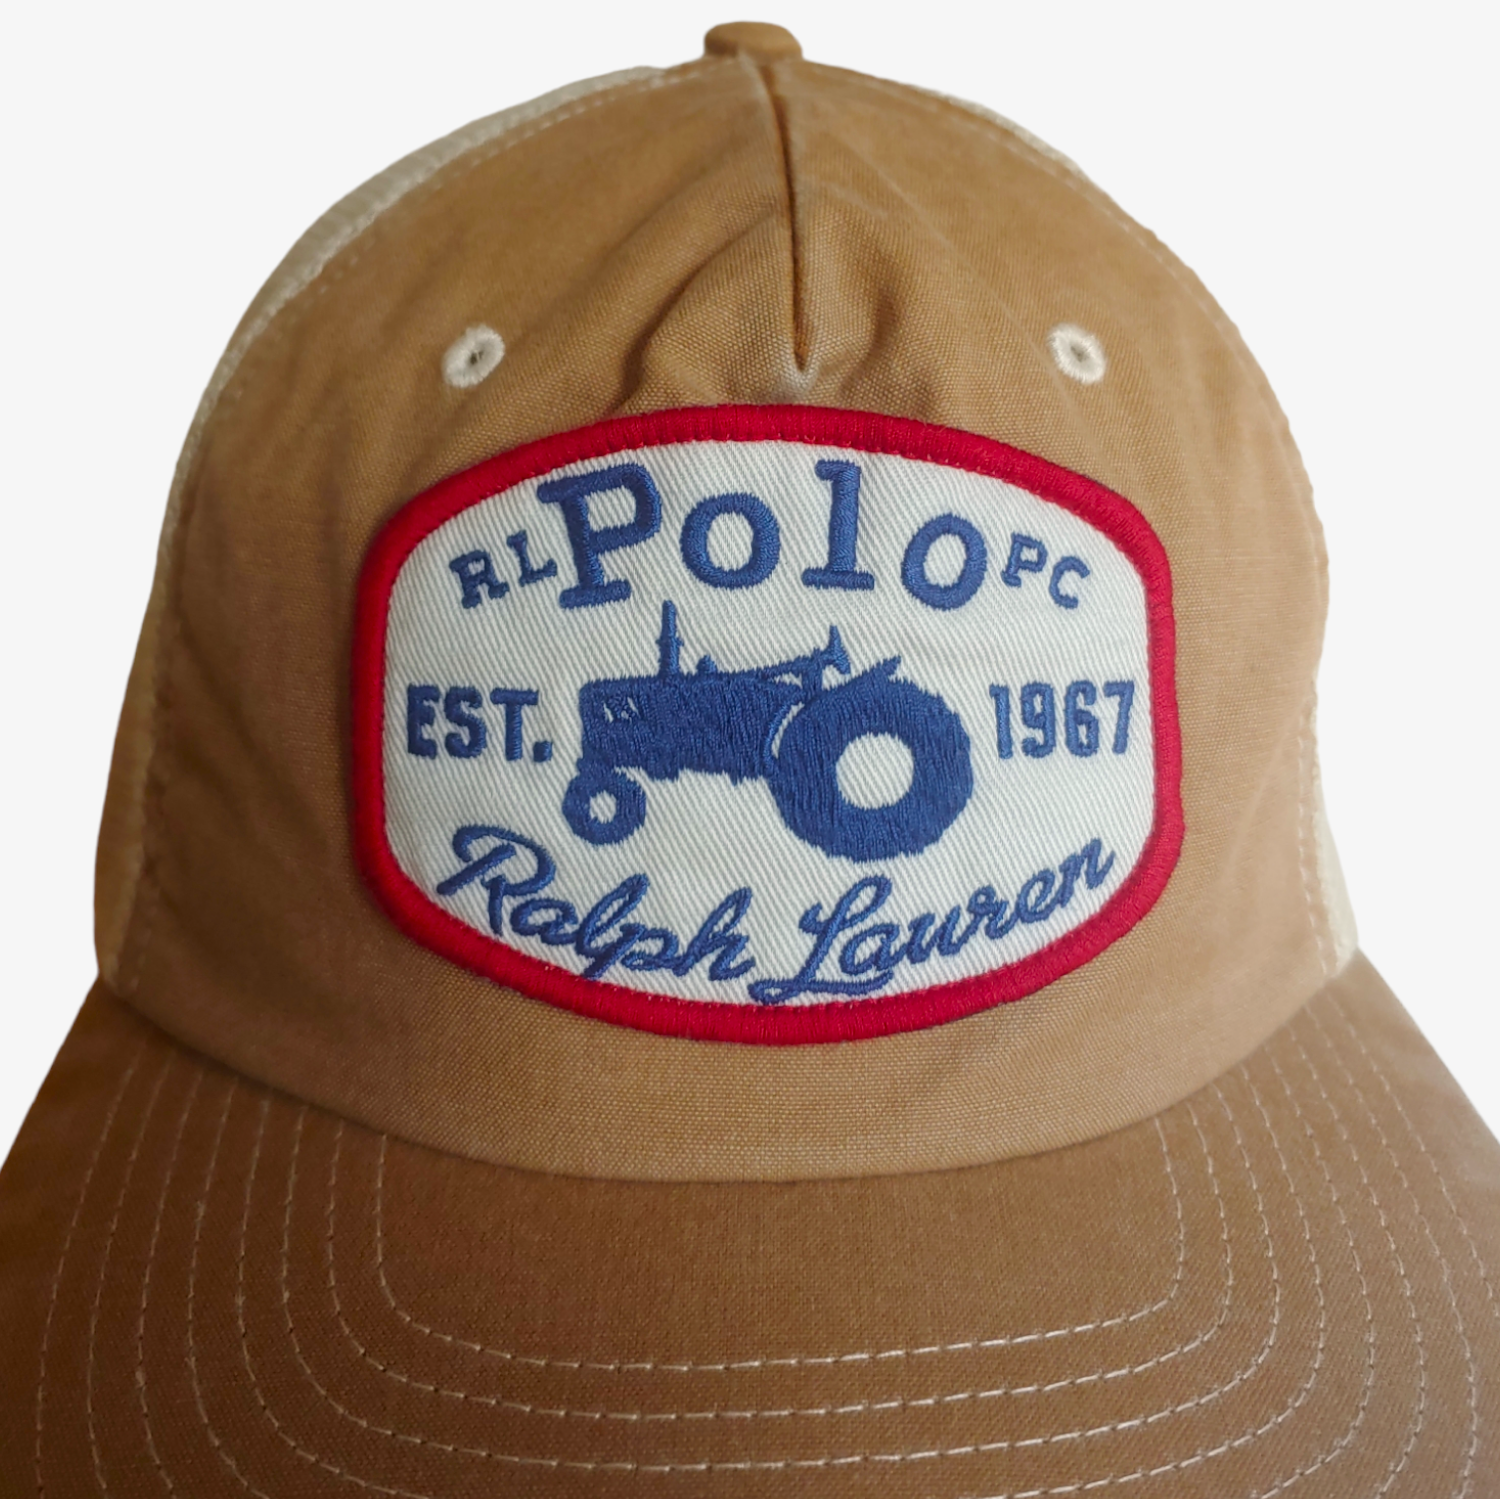 Polo Ralph Lauren Trucker Cap Brand New With Tags Badge - Casspios Dream